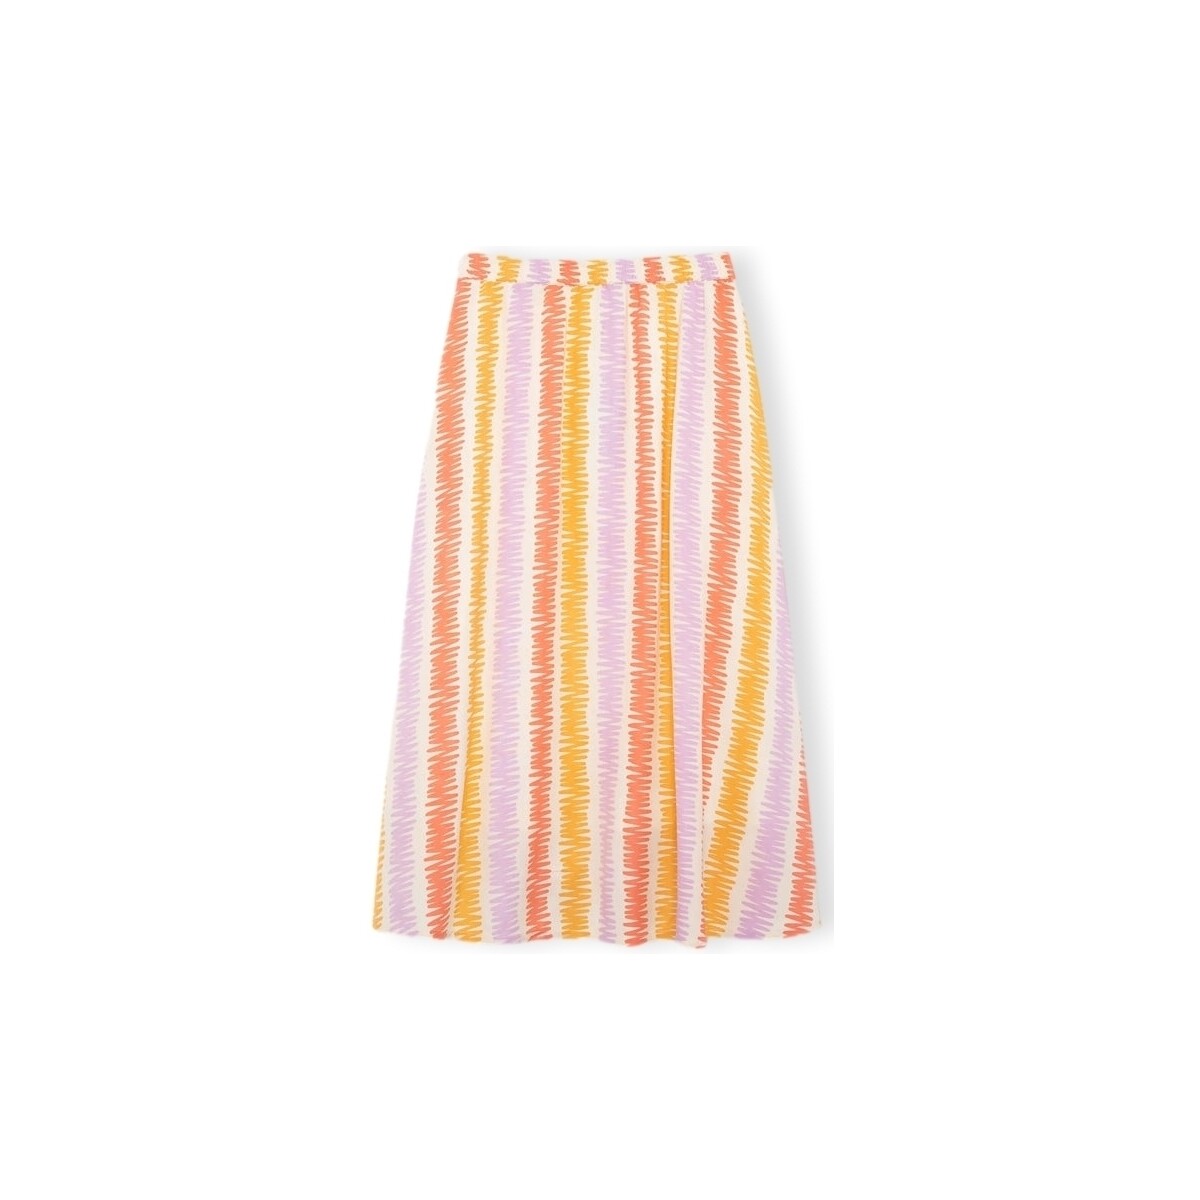 textil Mujer Faldas Compania Fantastica COMPAÑIA FANTÁSTICA Skirt 40104 - Stripes Multicolor